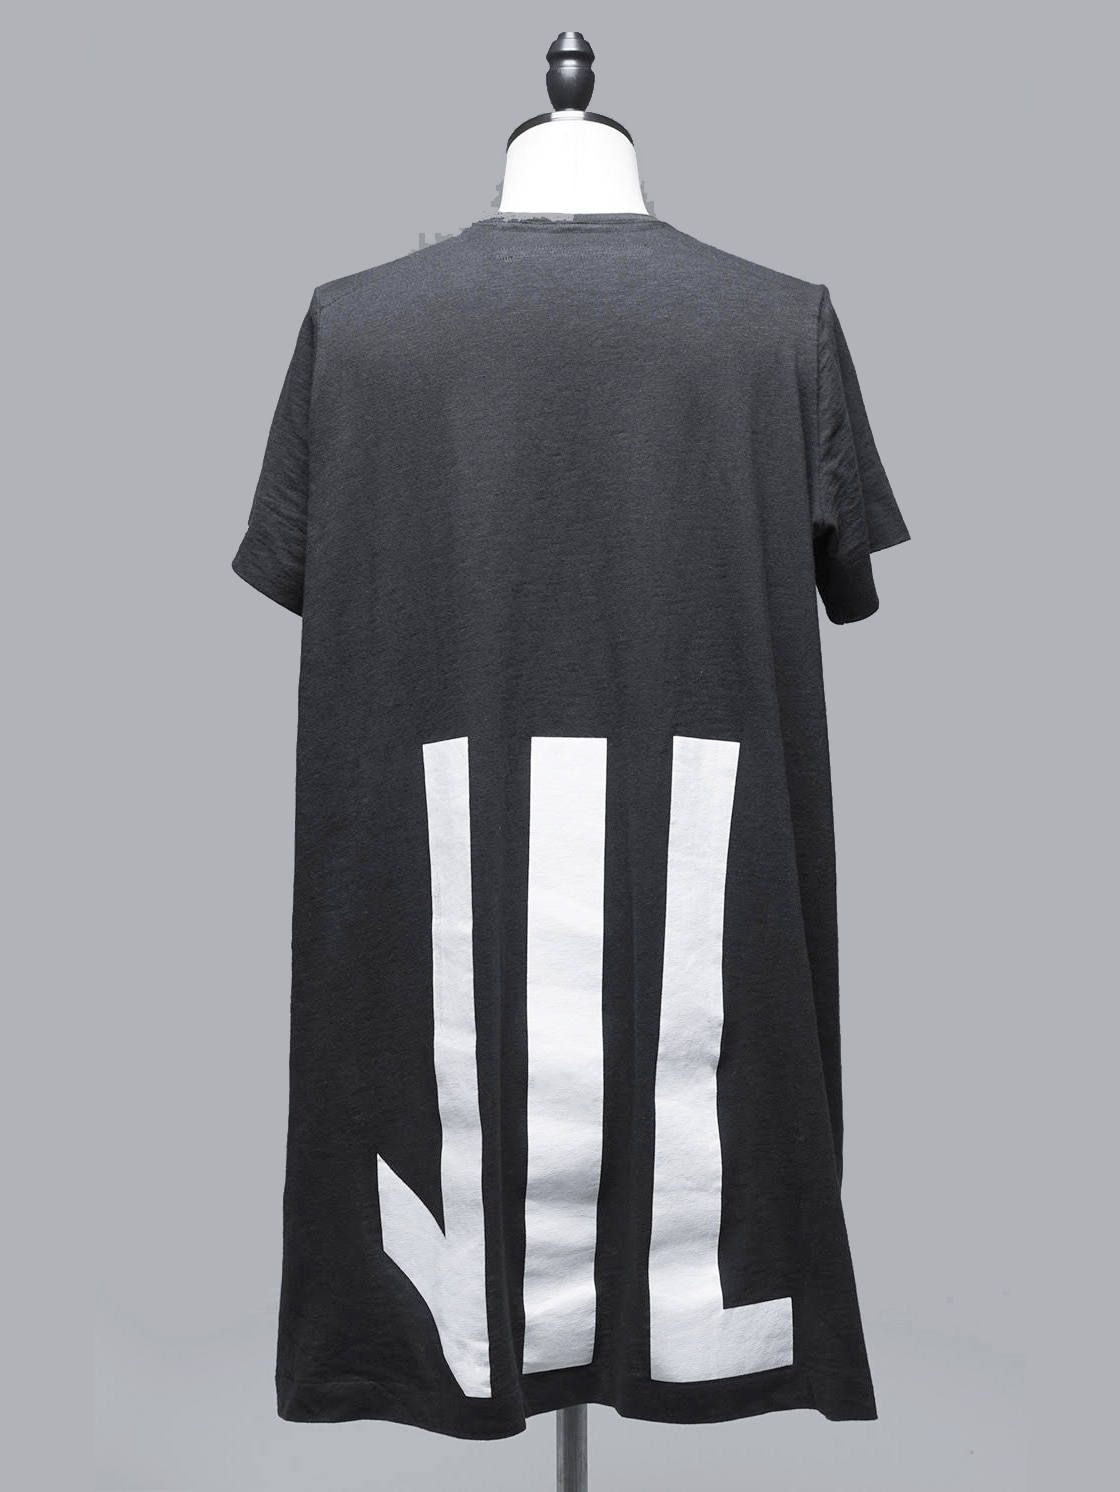 NILoS - バック家紋Tシャツ - NILøS BACK KAMON T BLACK | ADDICT WEB SHOP